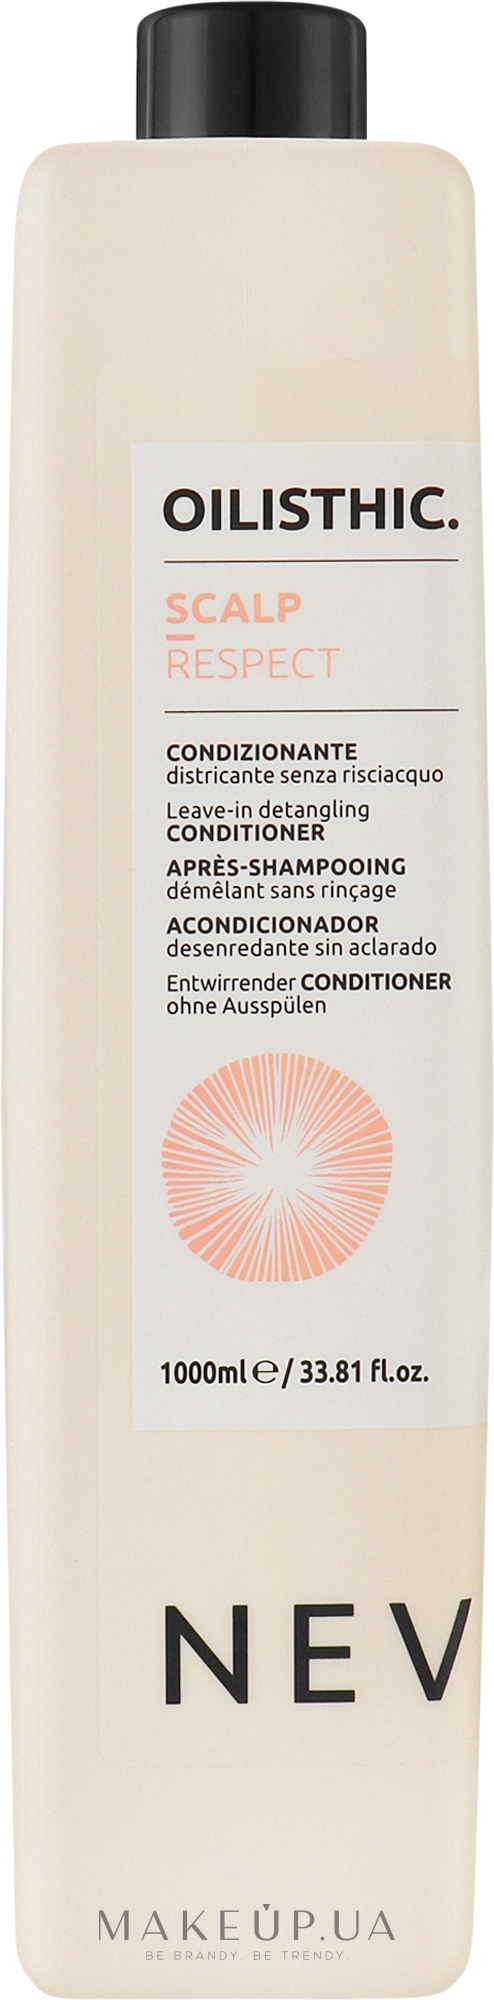 Несмываемый кондиционер для волос - Nevitaly Leave-In Detangling Conditioner — фото 1000ml